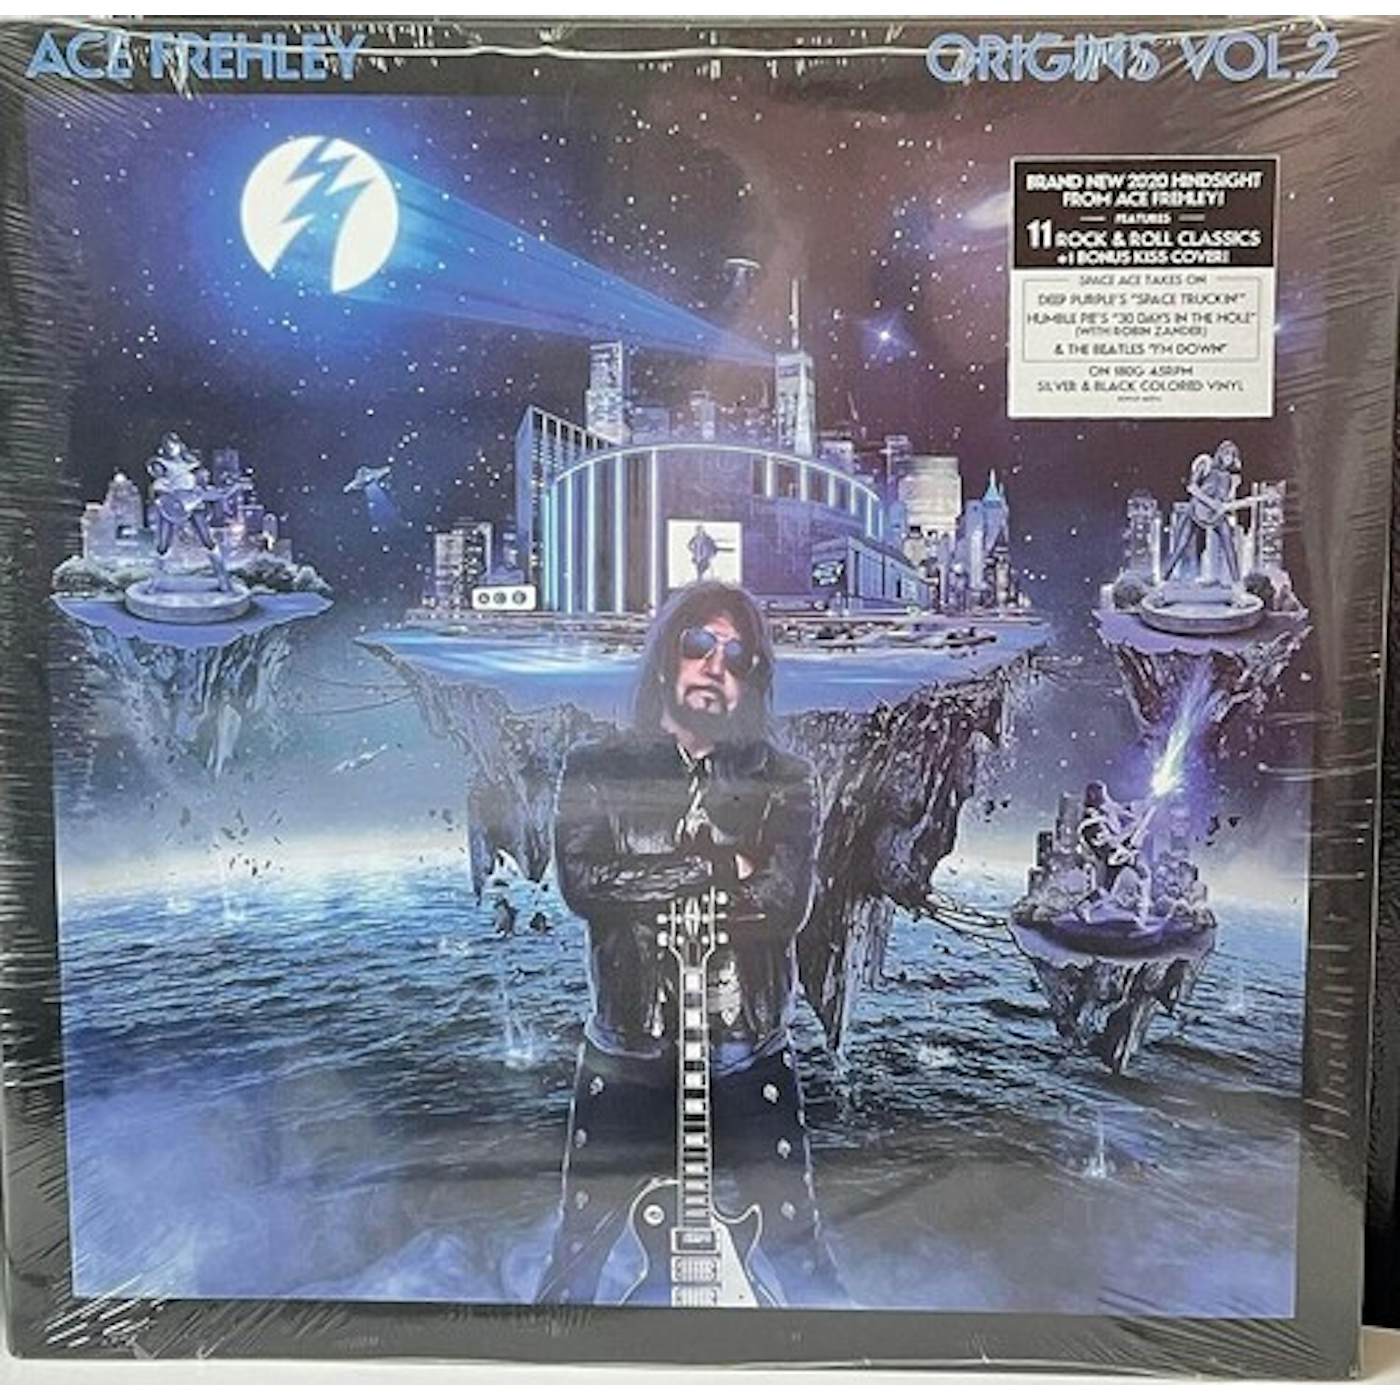 Ace Frehley ORIGINS 2 Vinyl Record